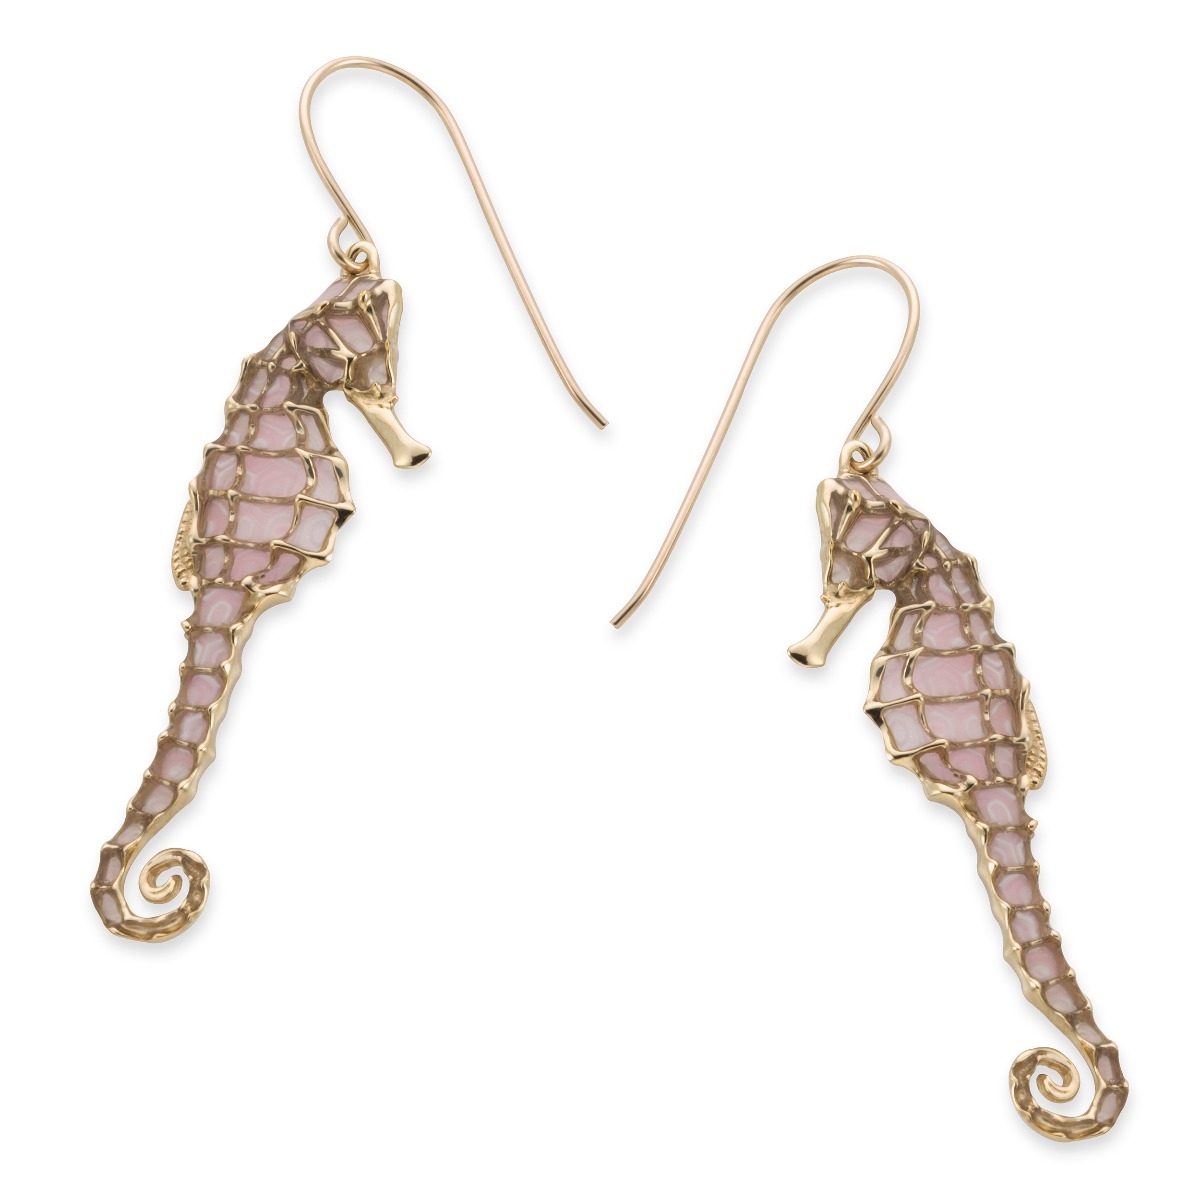 Adina Plastelina 24K Gold Plated Silver Seahorse Earrings - Rose Quartz  - 1